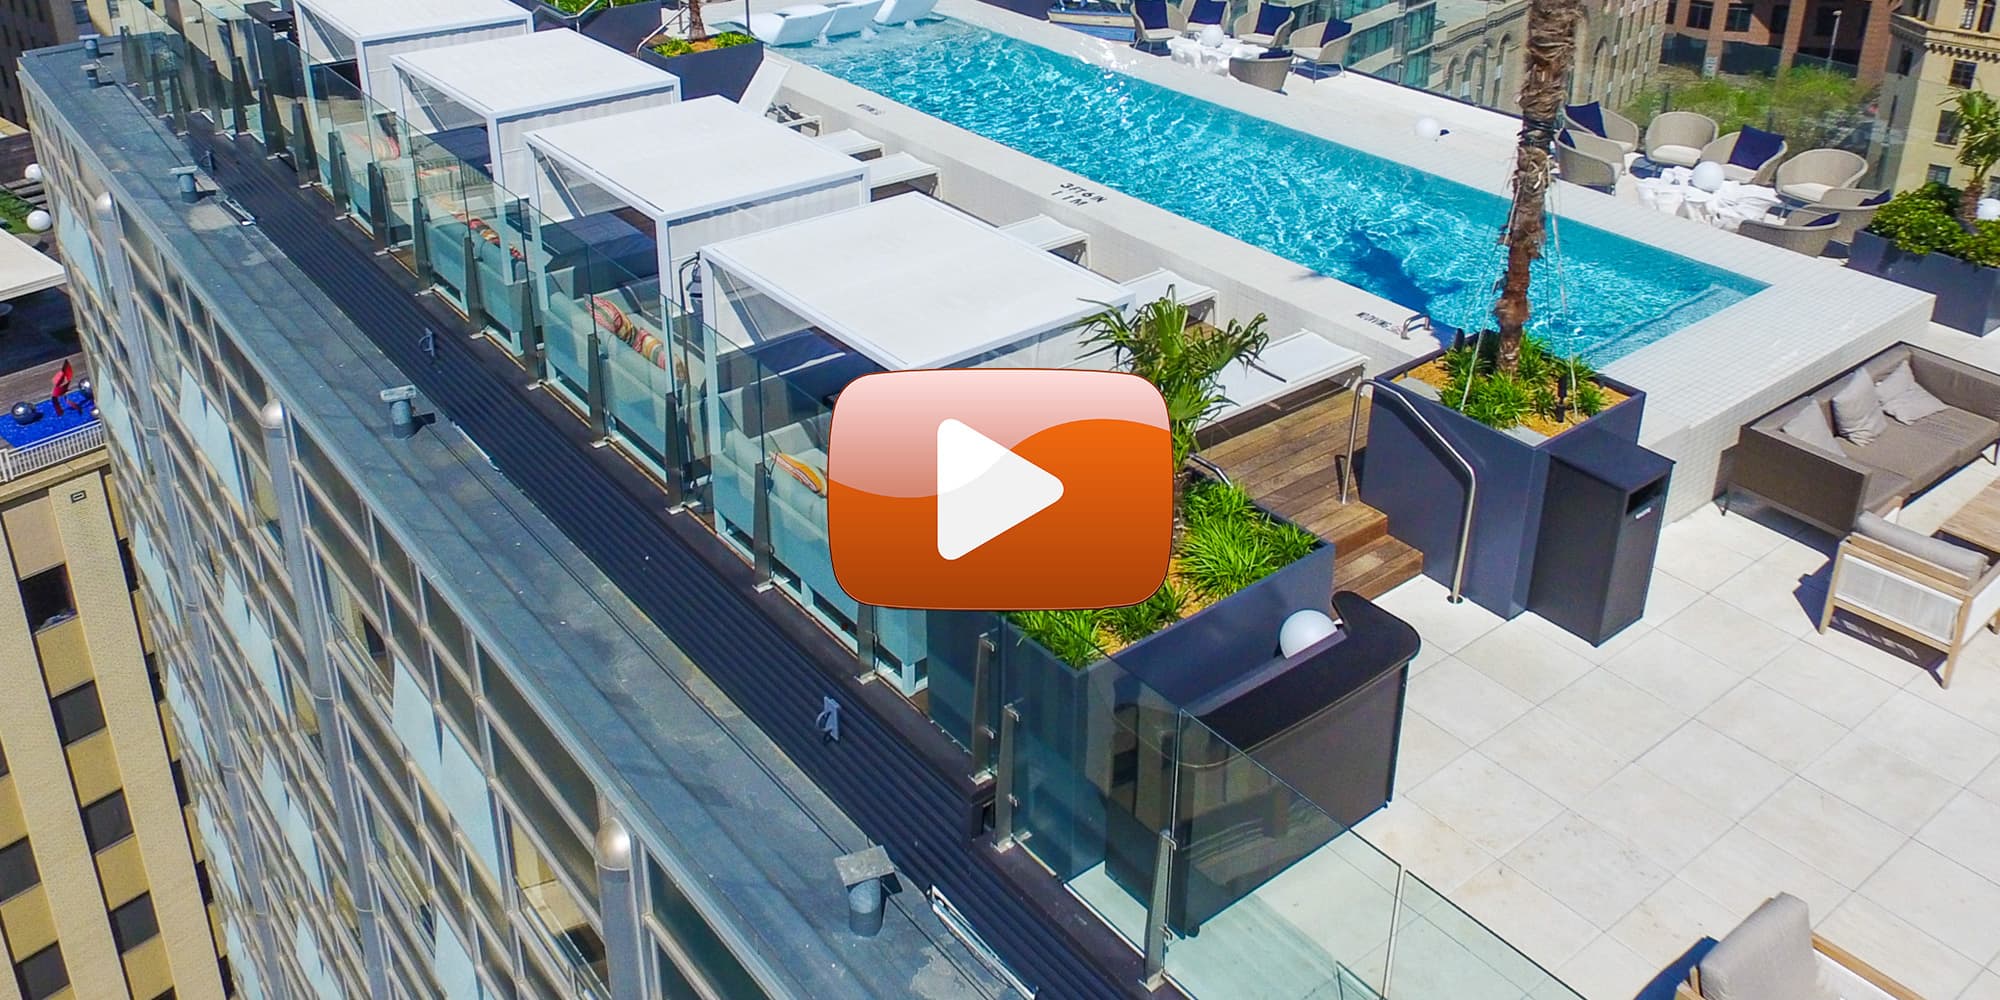 Viva railings dallas statler hotel and residences windwall glass railing system